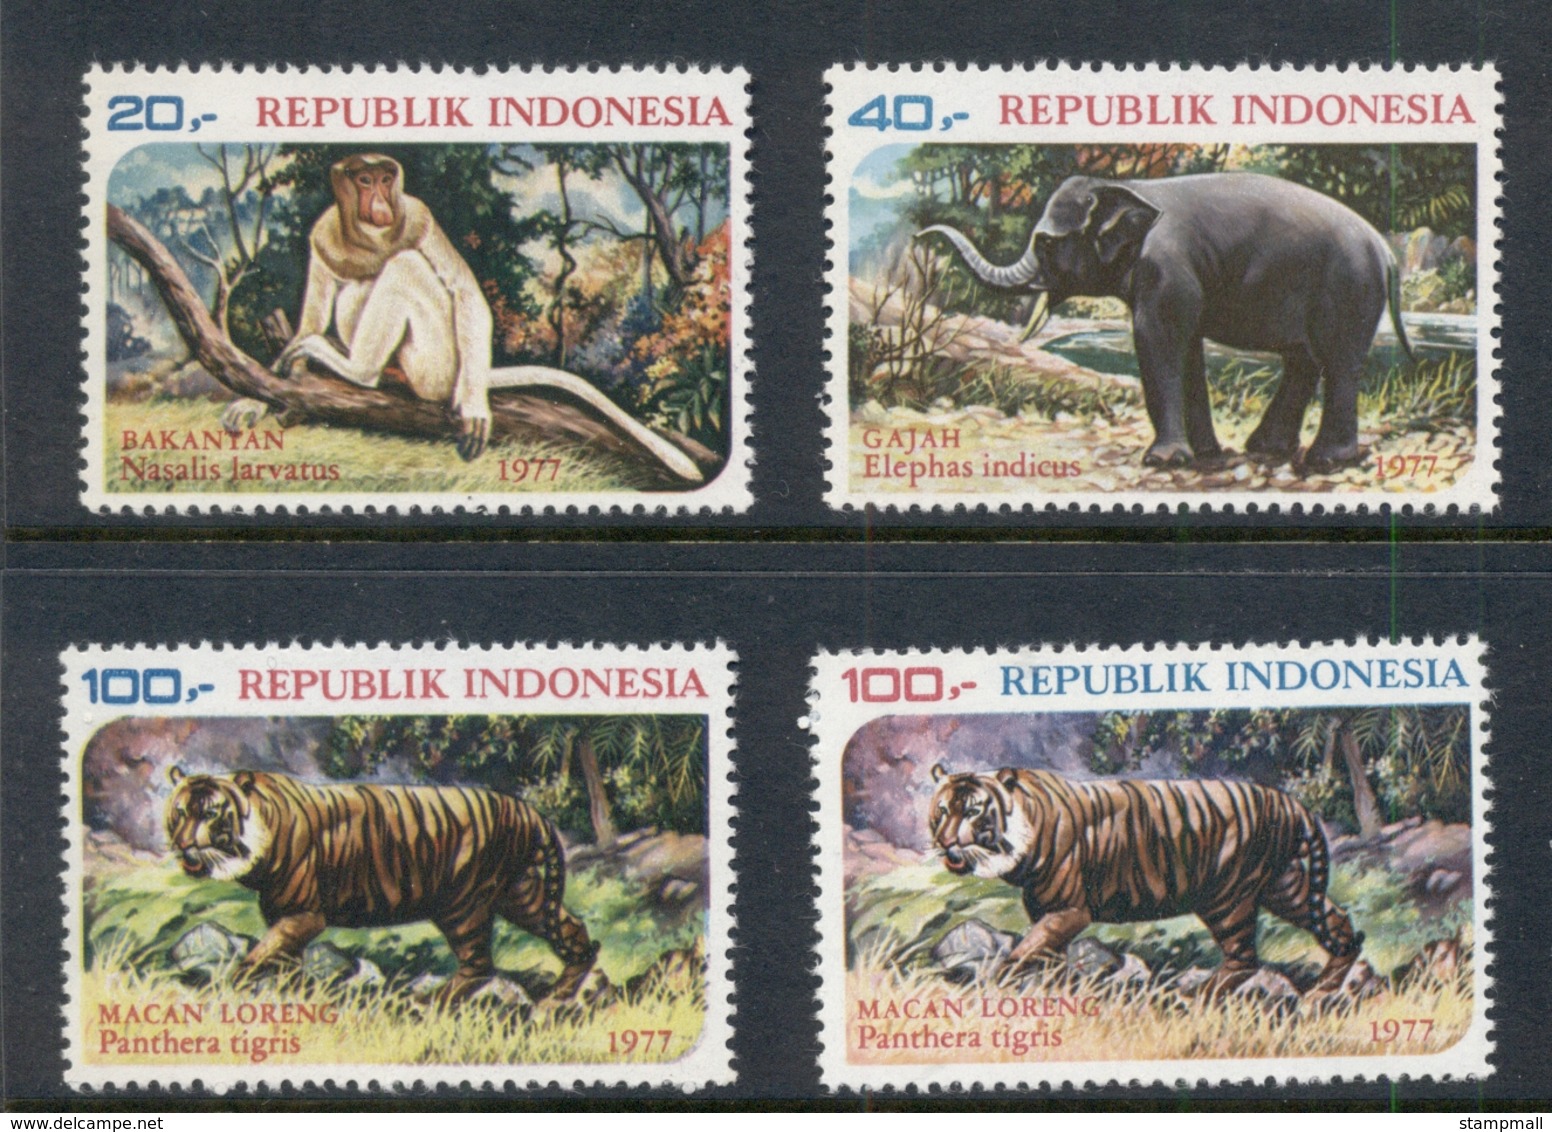 Indonesia 1977 Wildlife Protection MUH - Indonesia